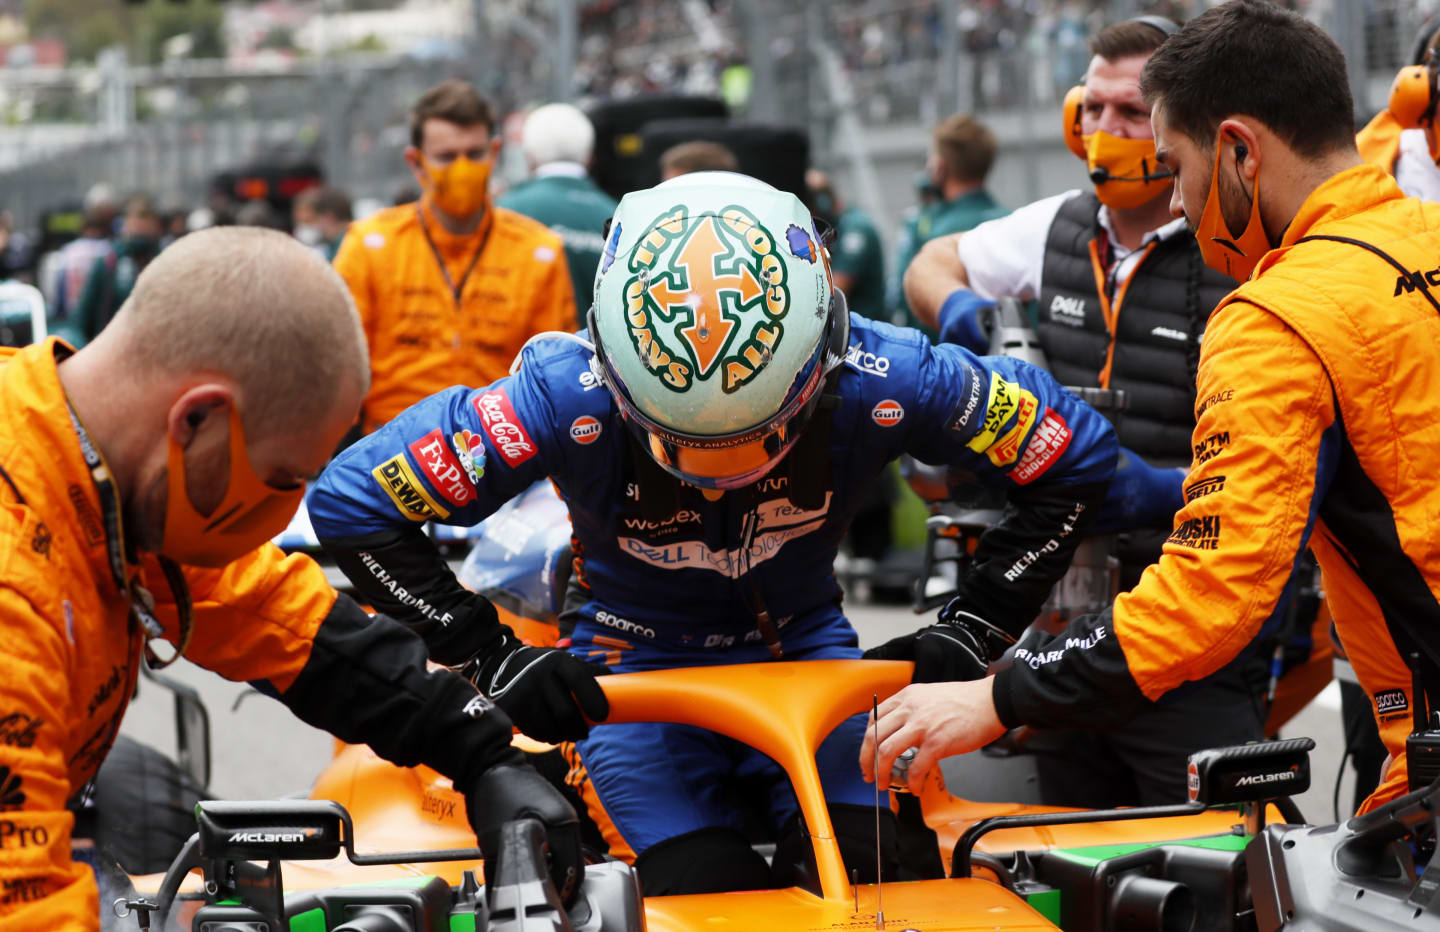 SOCHI, RUSSIA - SEPTEMBER 26: Daniel Ricciardo of Australia and McLaren F1 prepares to drive on the